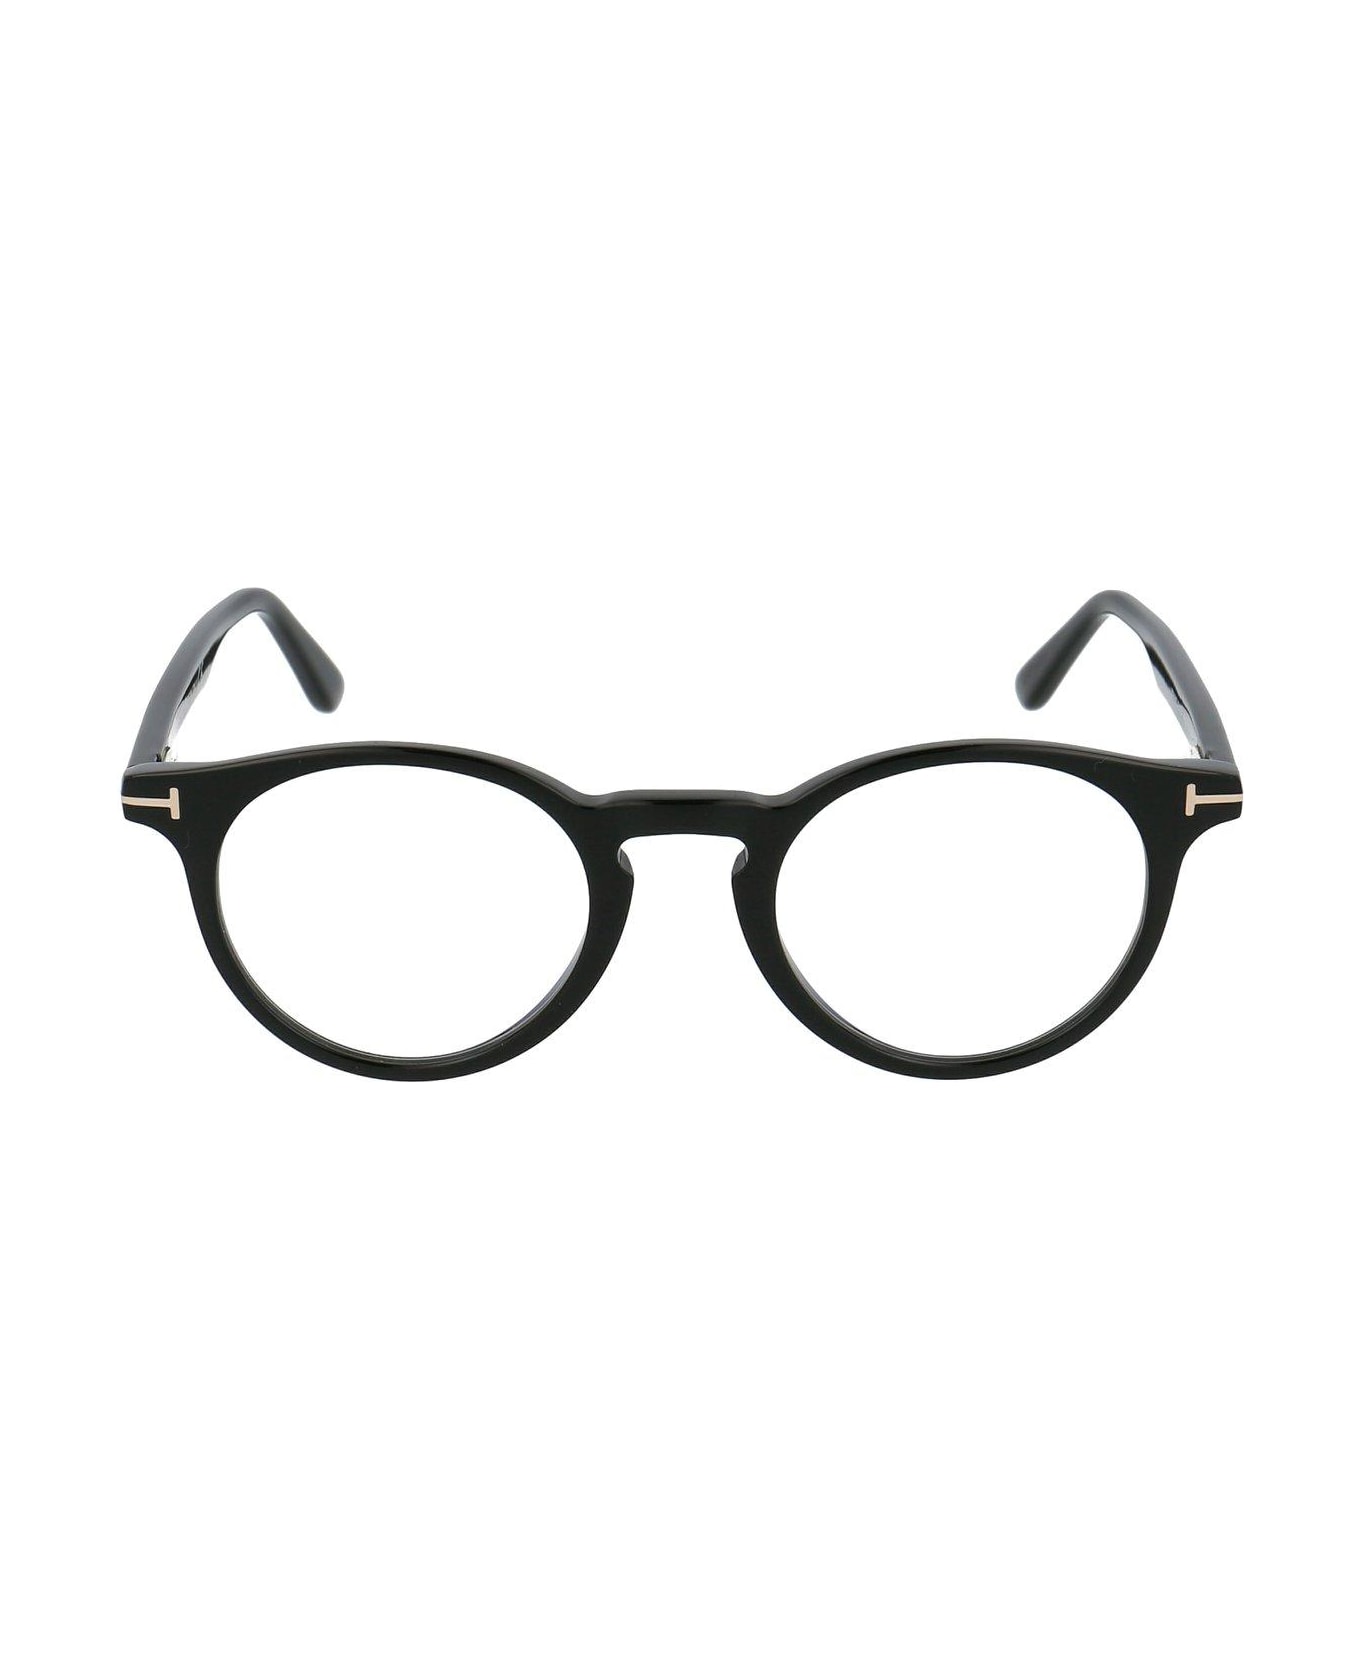 Tom Ford Eyewear Round Frame Glasses Glasses - 001 Nero Lucido アイウェア